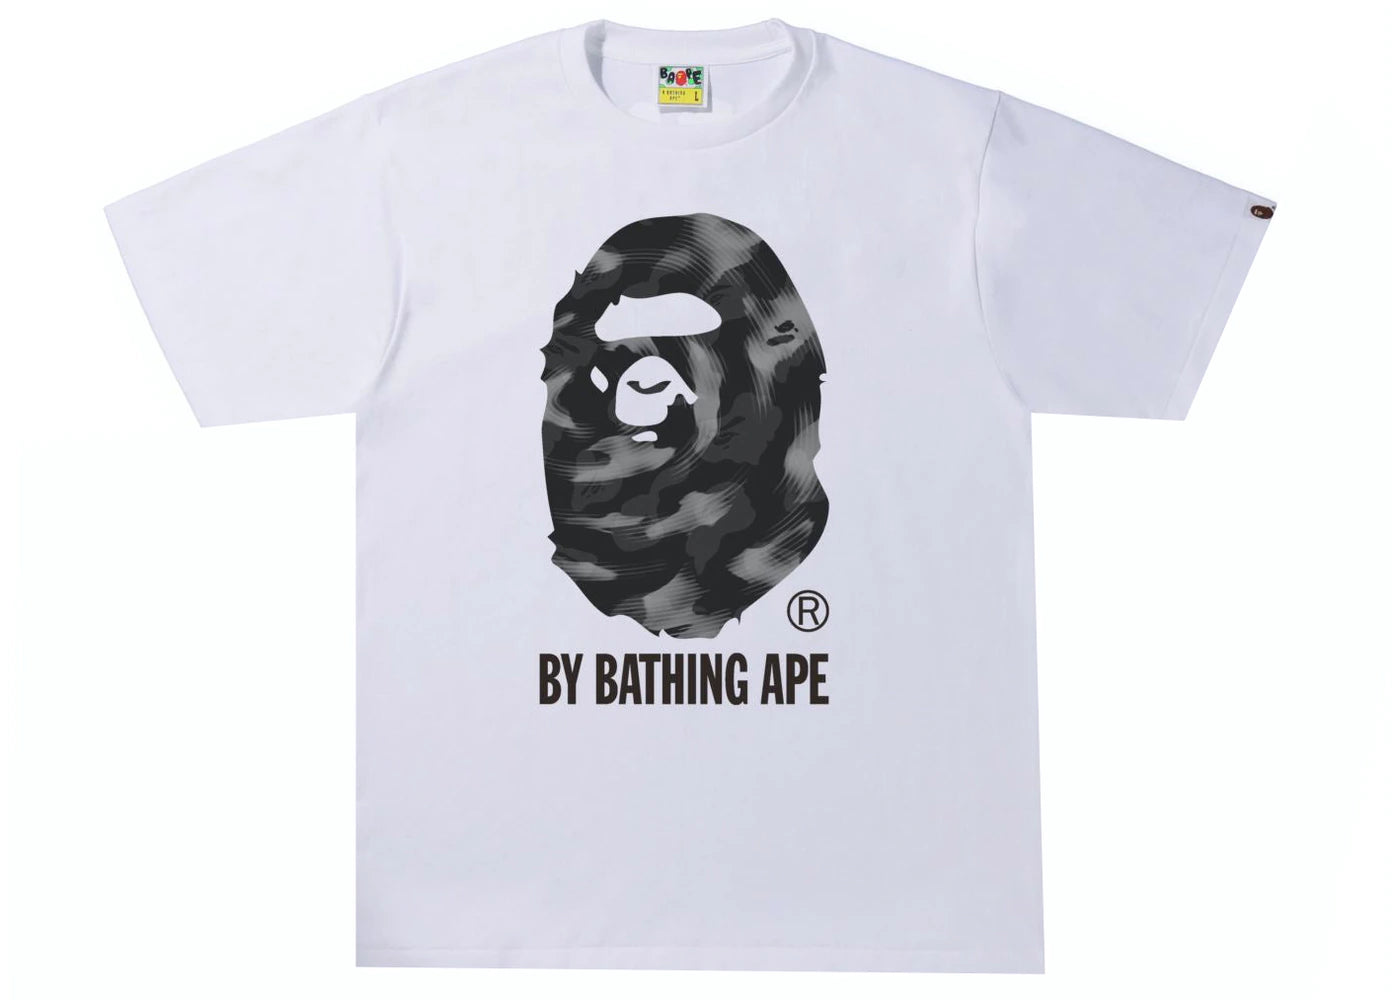 BAPE Stroke Camo by Bathing Ape Tee White/Black